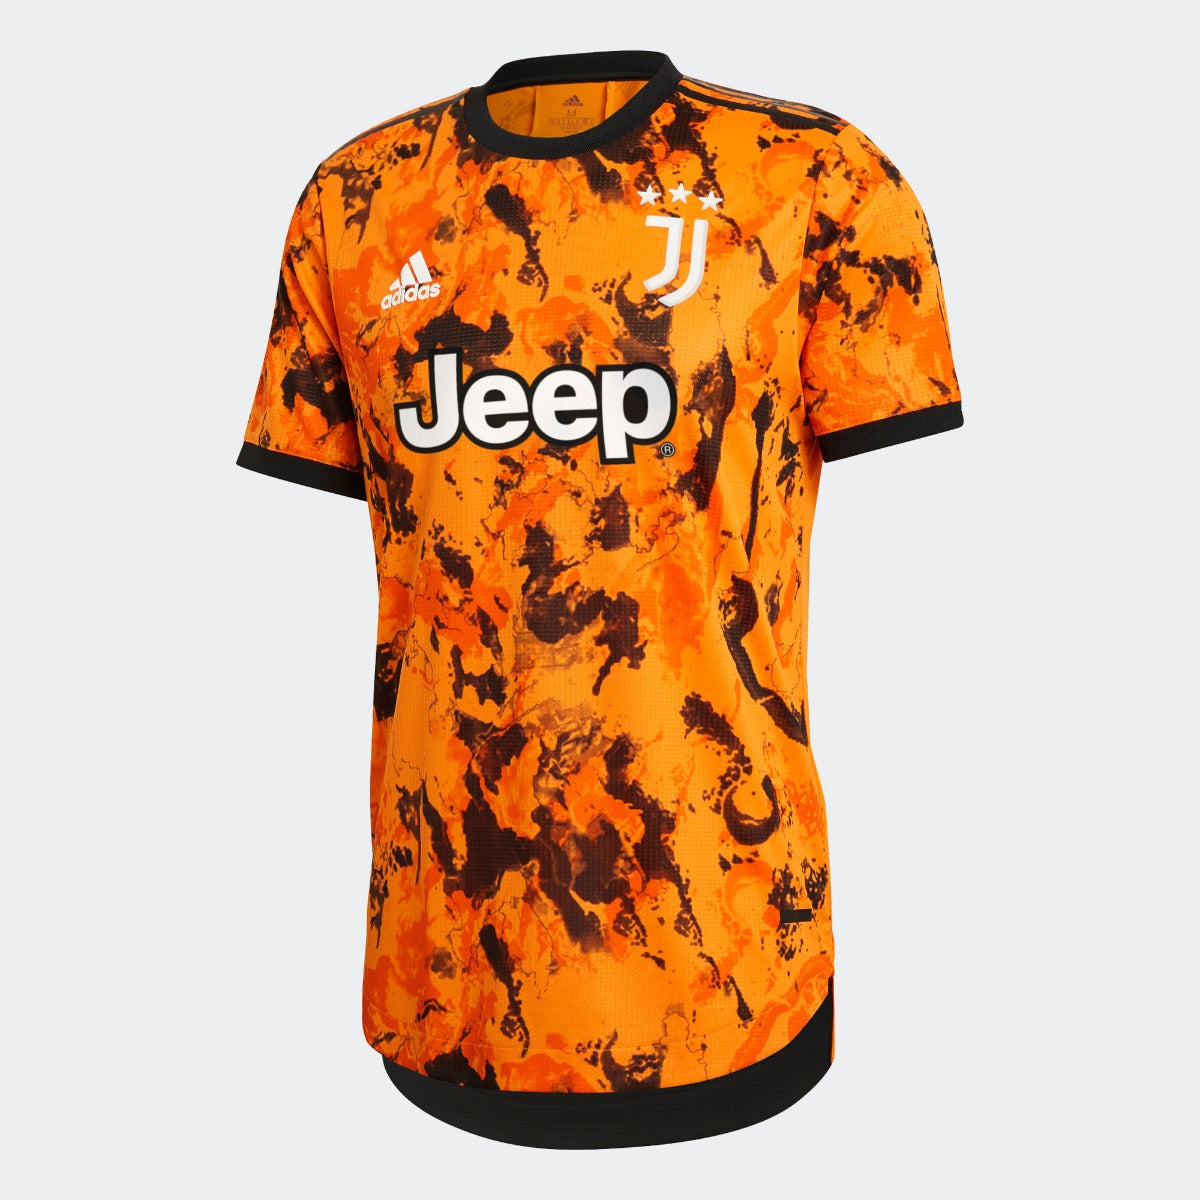 Adidas 2020-21 Juventus Authentic Third Jersey - Orange-Black